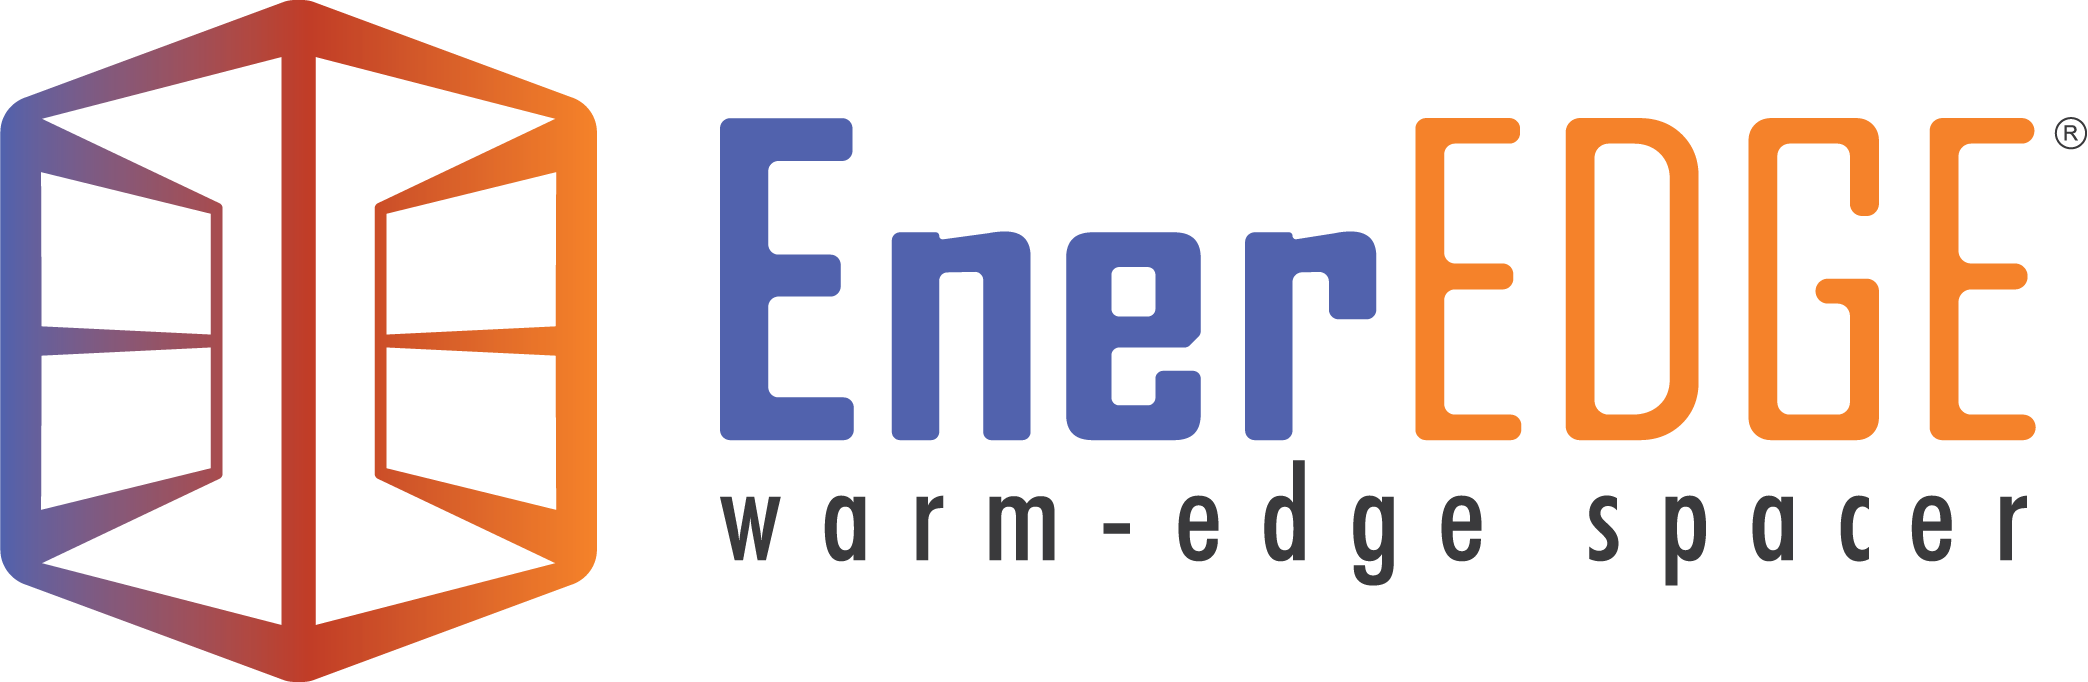 EnerEdge Spacer Logo